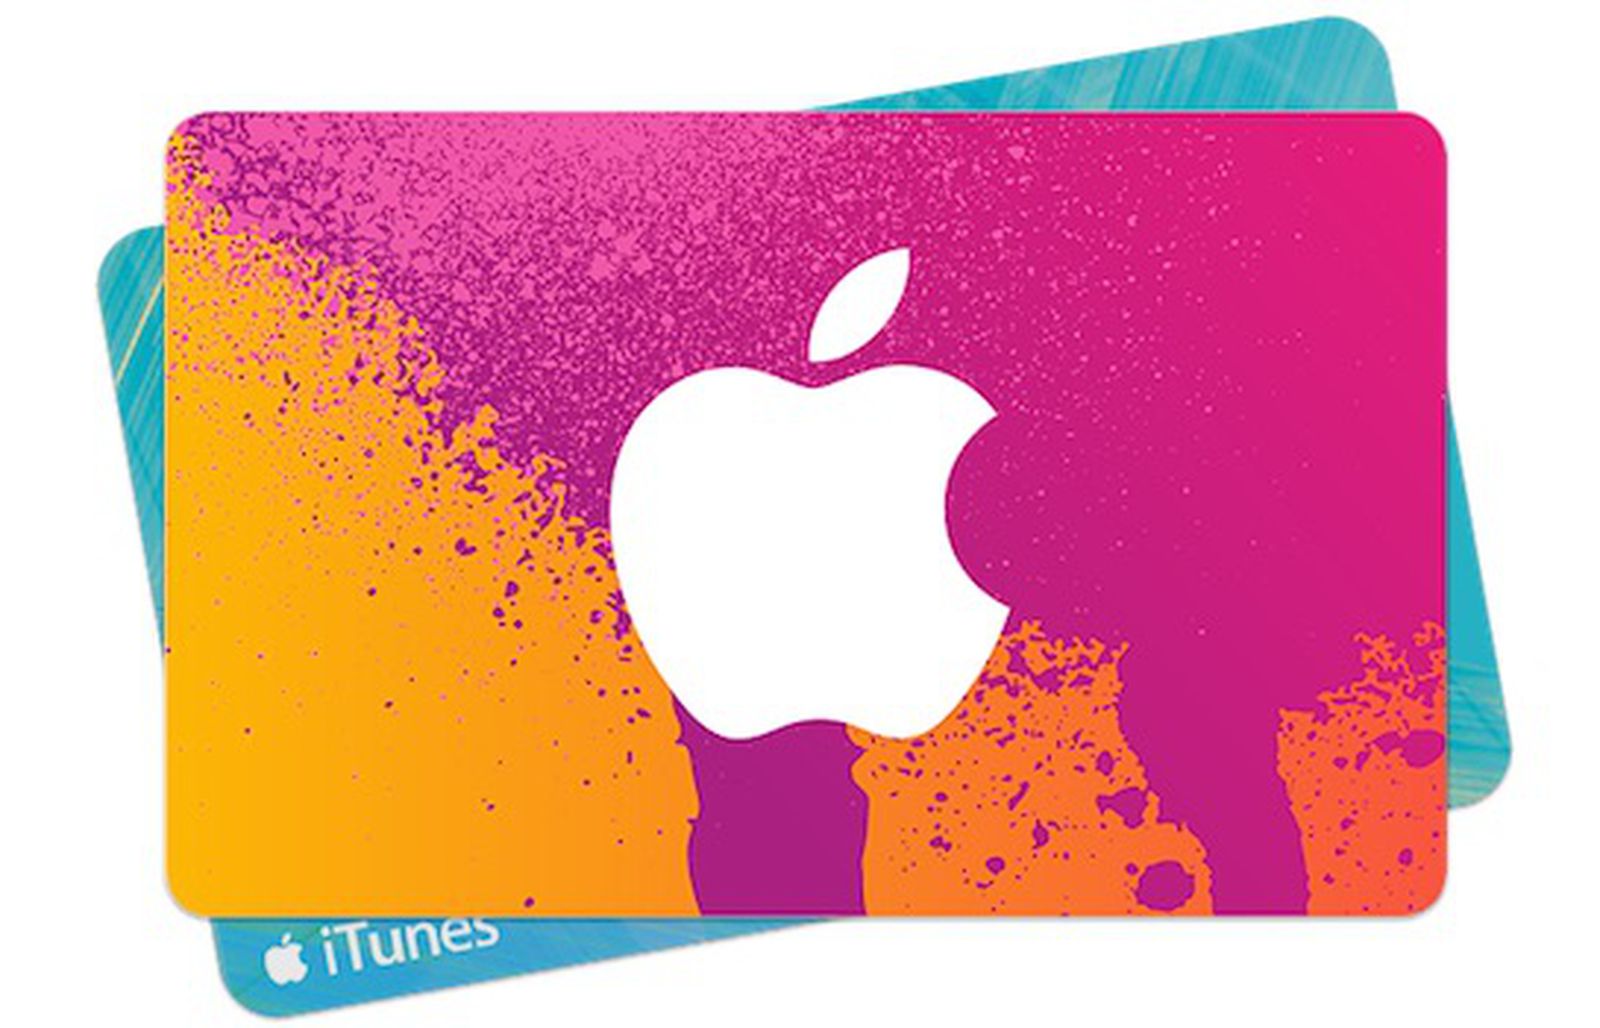 Het is goedkoop visueel Munching What to Buy With the iTunes Gift Card You Unwrapped Today - MacRumors